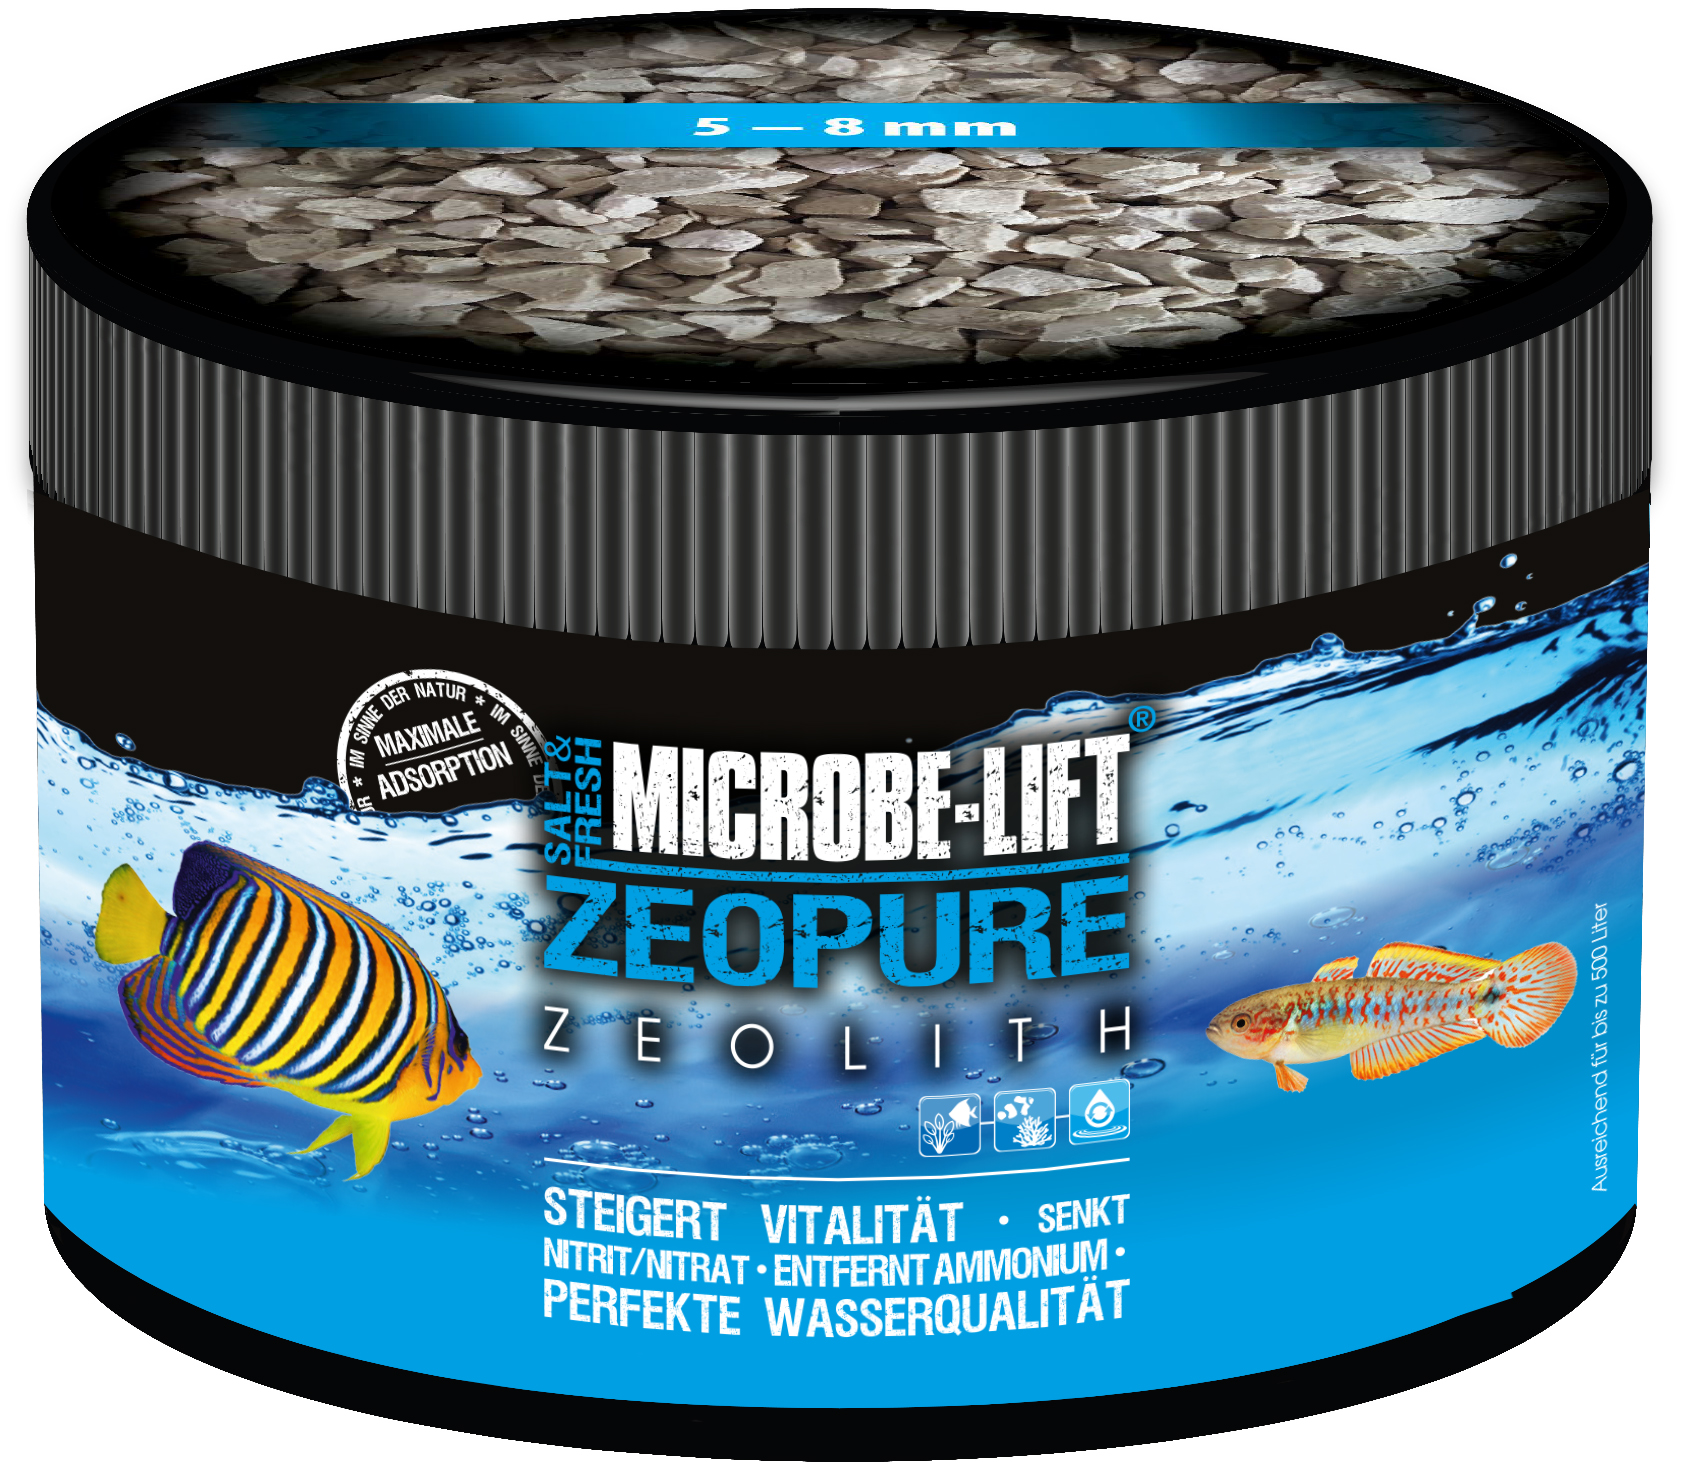 Microbe-Lift Zeopure - 500ml - Zeolith